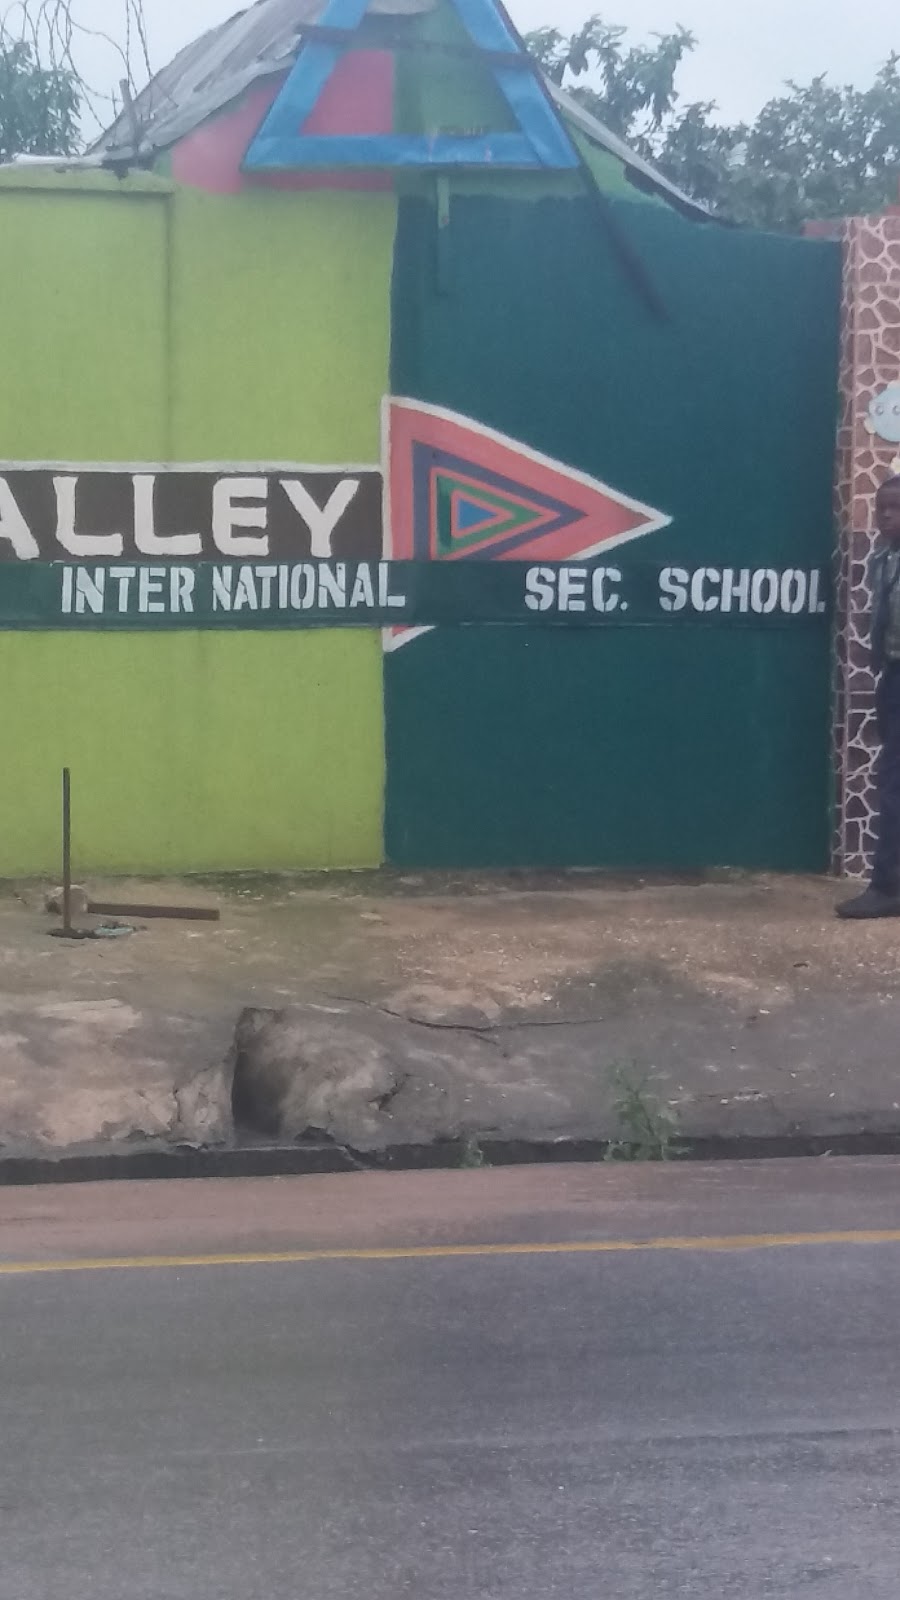 Lilley Valley International School